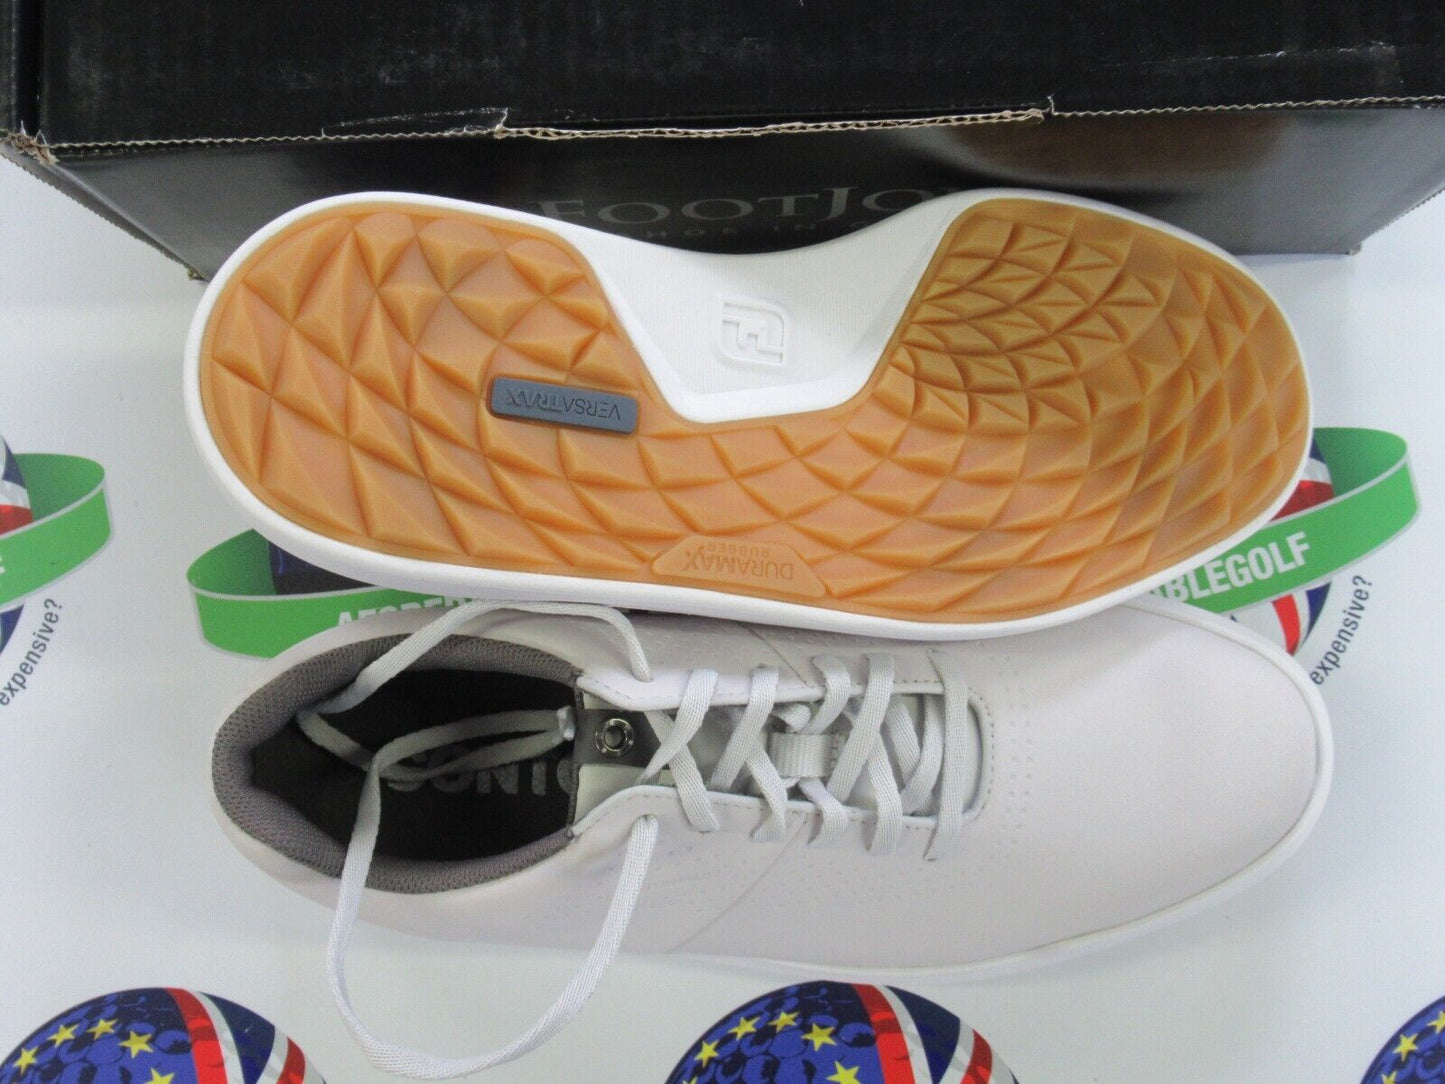 footjoy contour casual golf shoes 54088k white uk size 8 medium